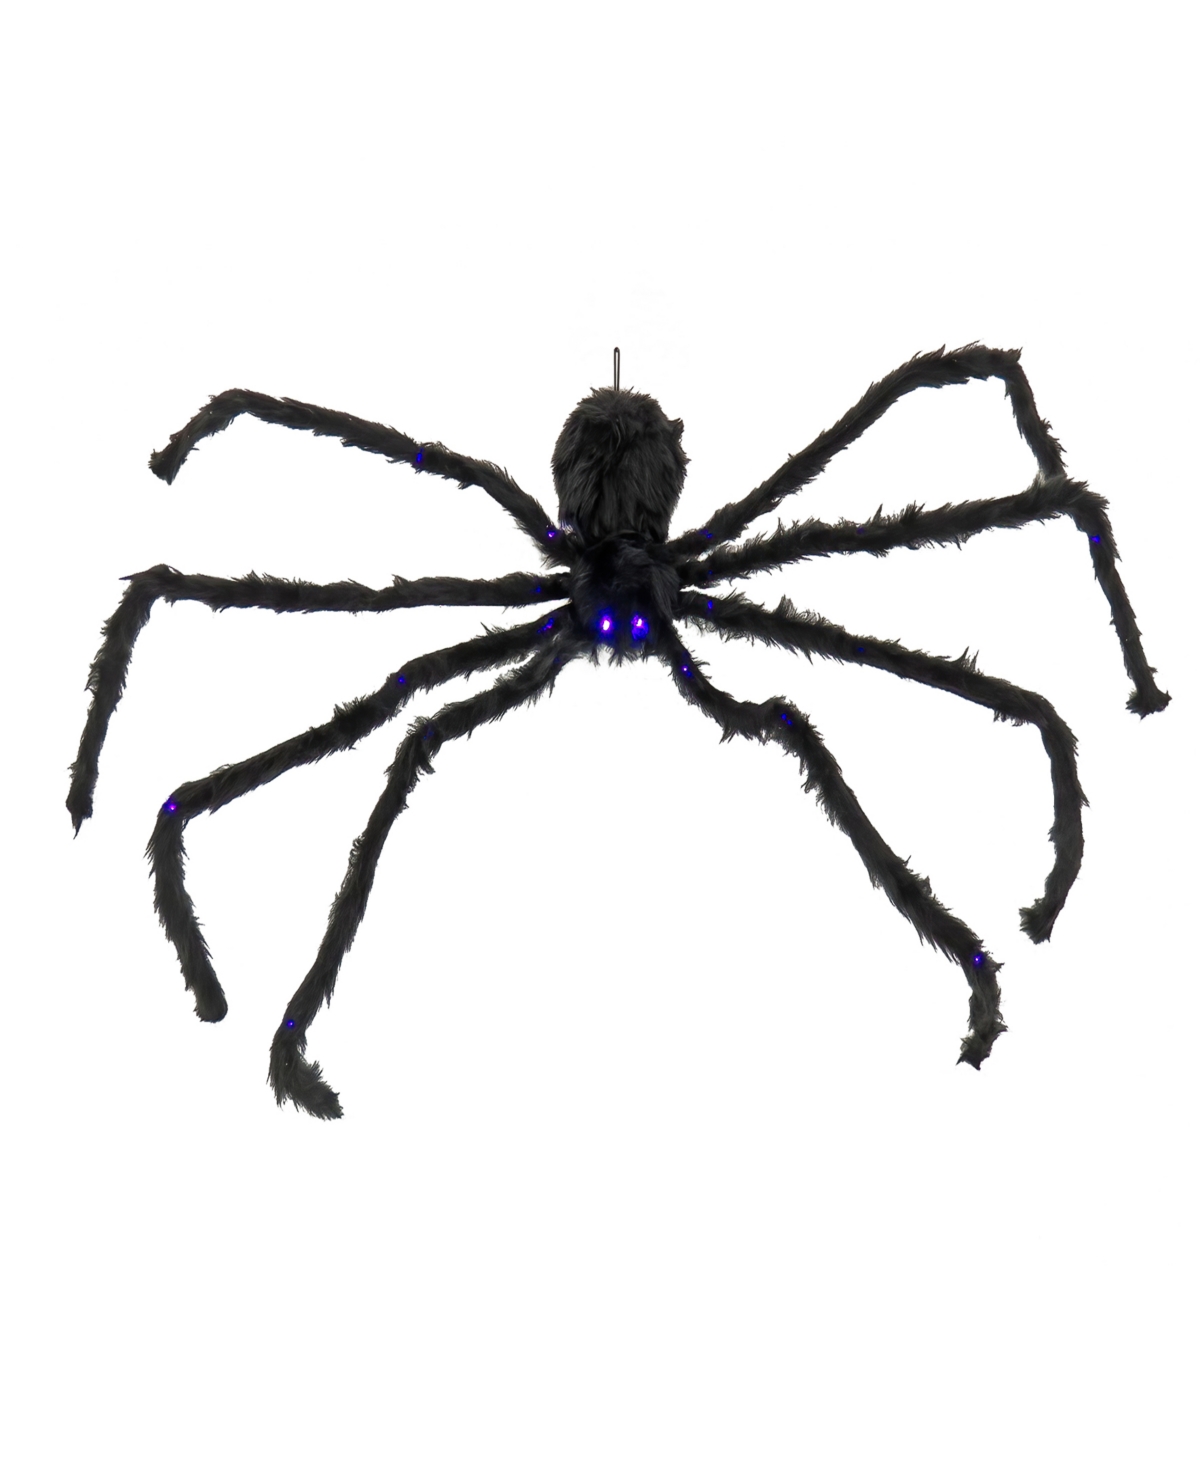 50" Halloween Spider with Led Lights - Black